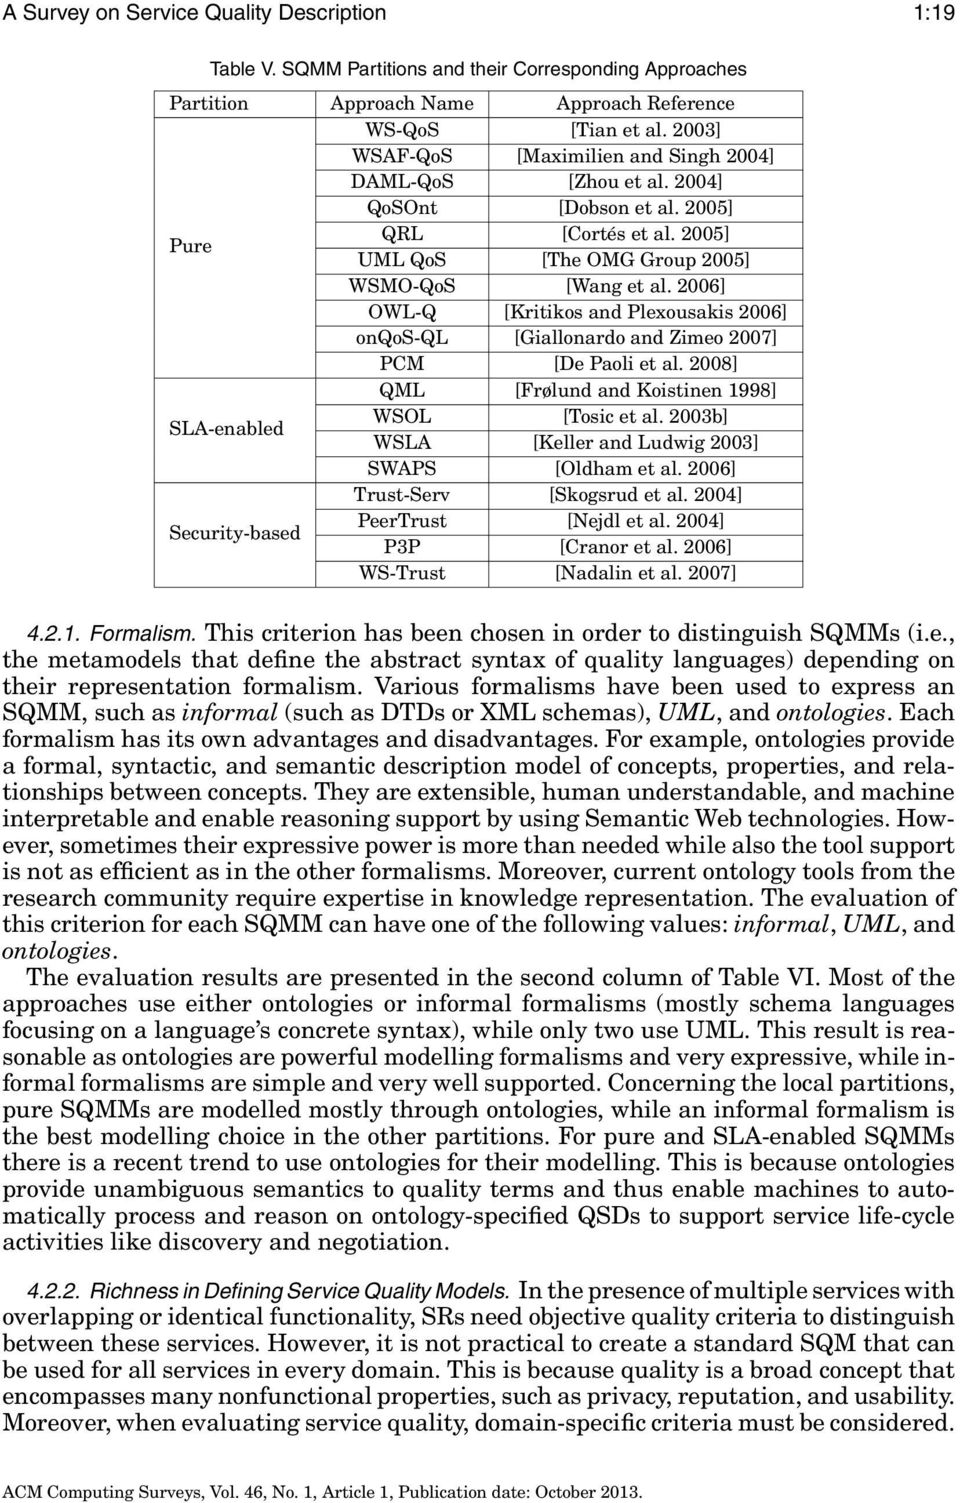 2006] OWL-Q [Kritikos and Plexousakis 2006] onqos-ql [Giallonardo and Zimeo 2007] PCM [De Paoli et al. 2008] QML [Frølund and Koistinen 1998] SLA-enabled WSOL [Tosic et al.